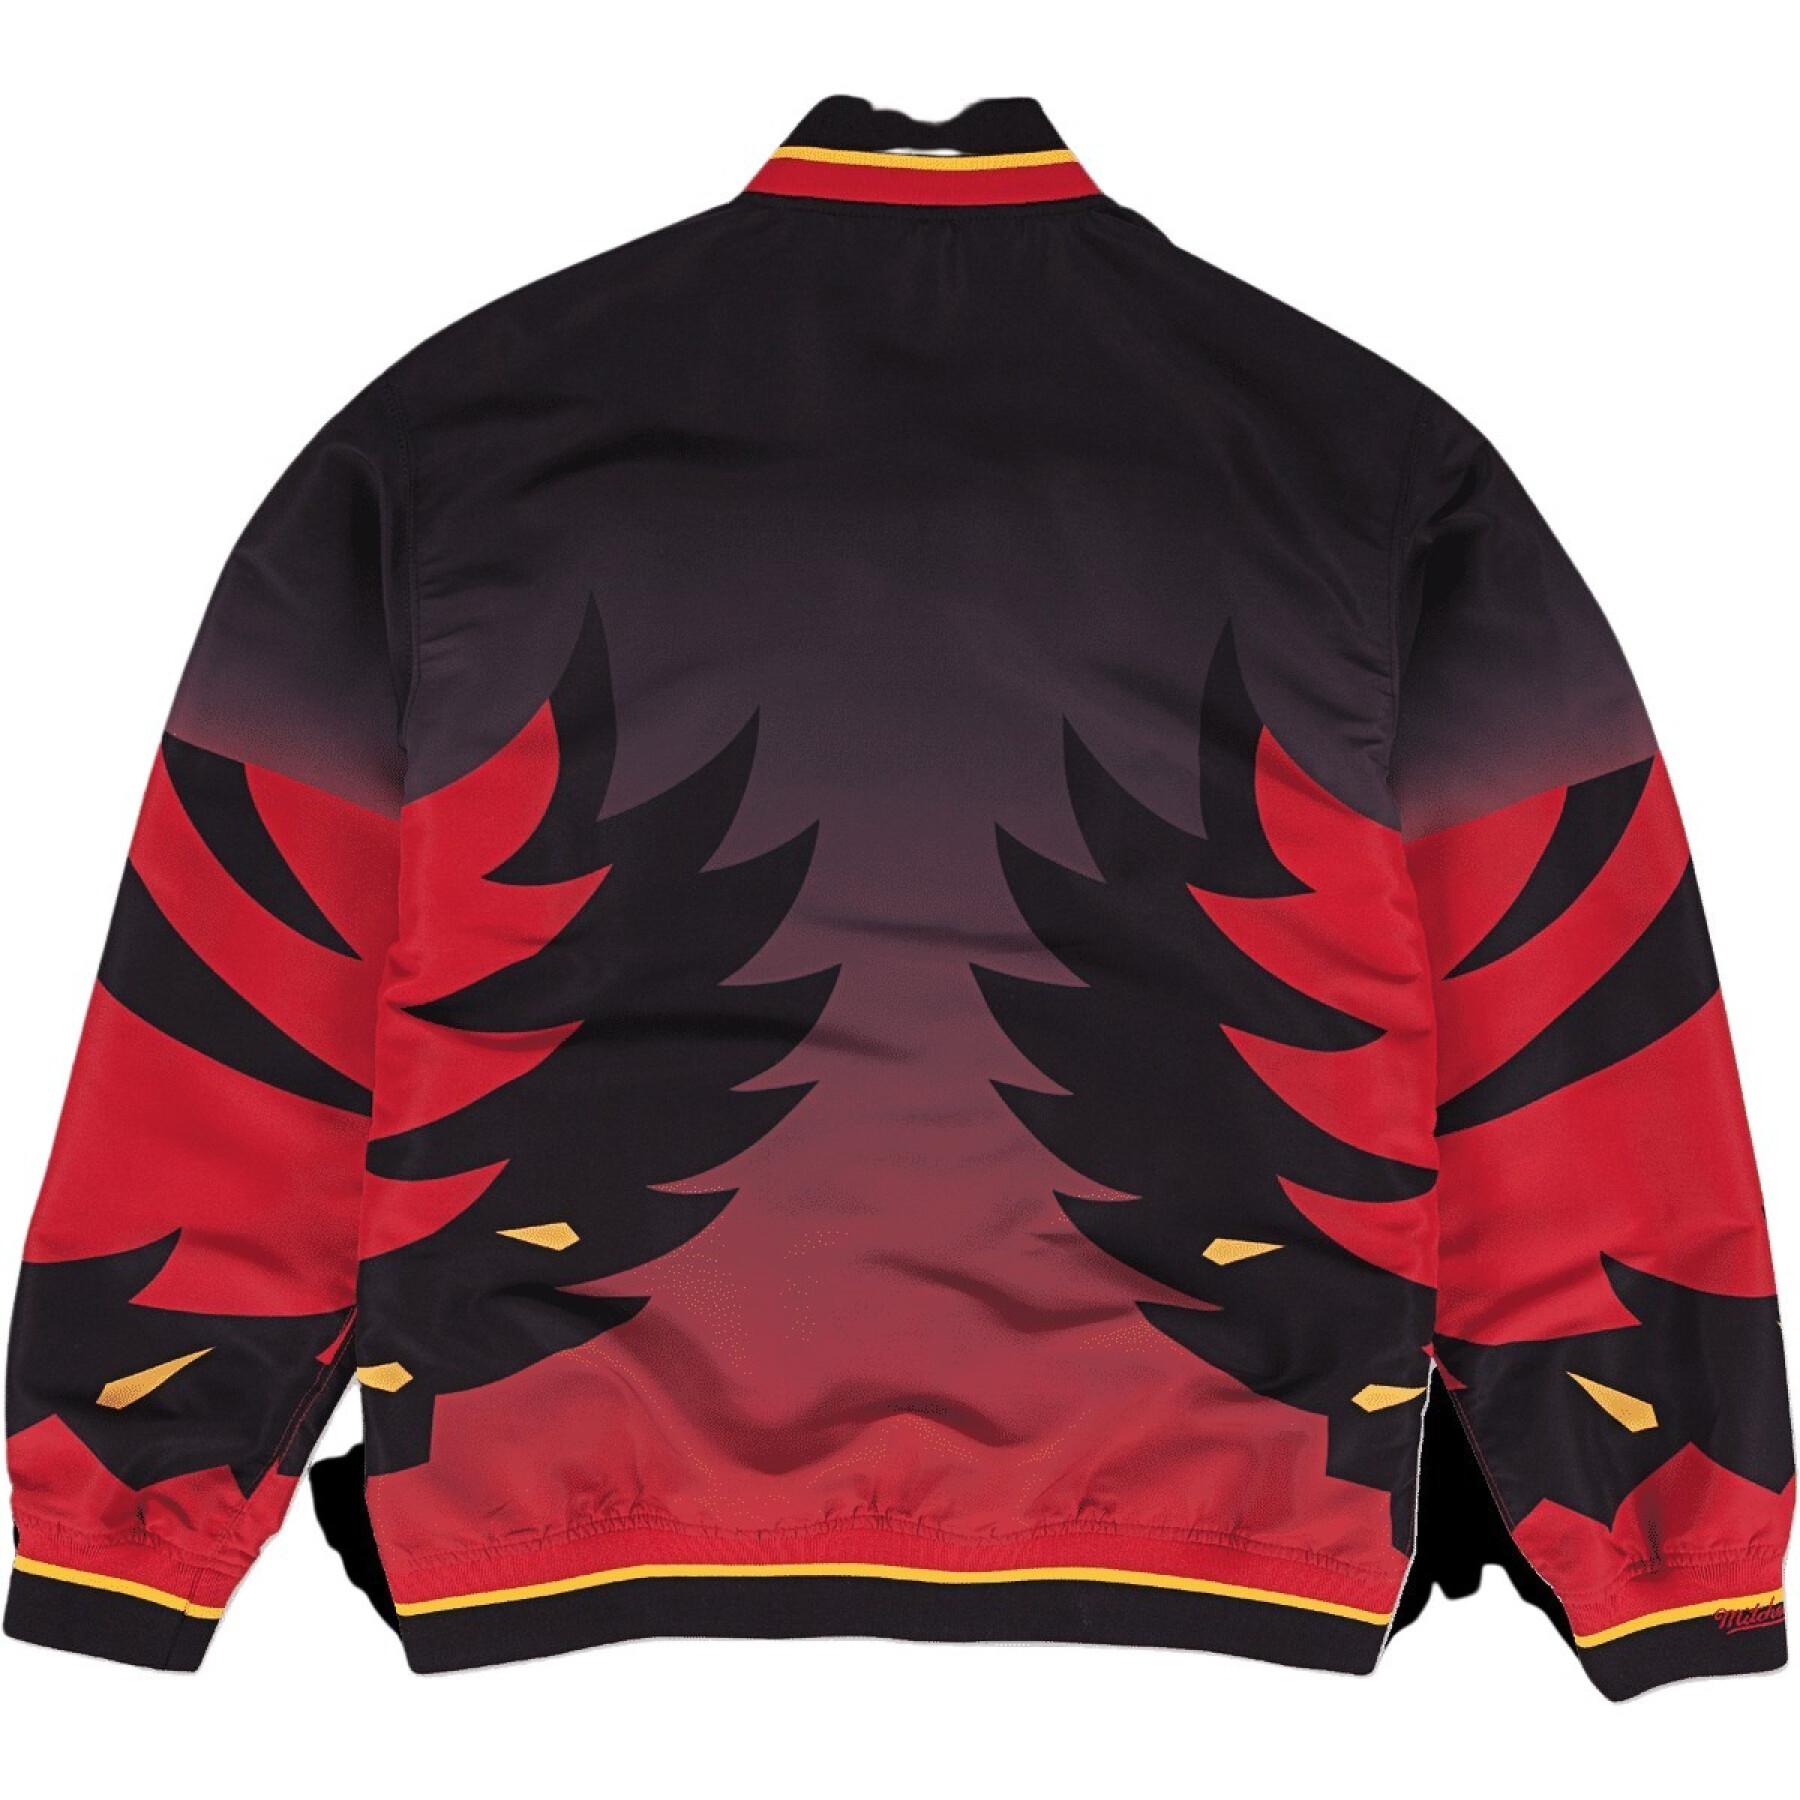 Jacket Atlanta Hawks authentic